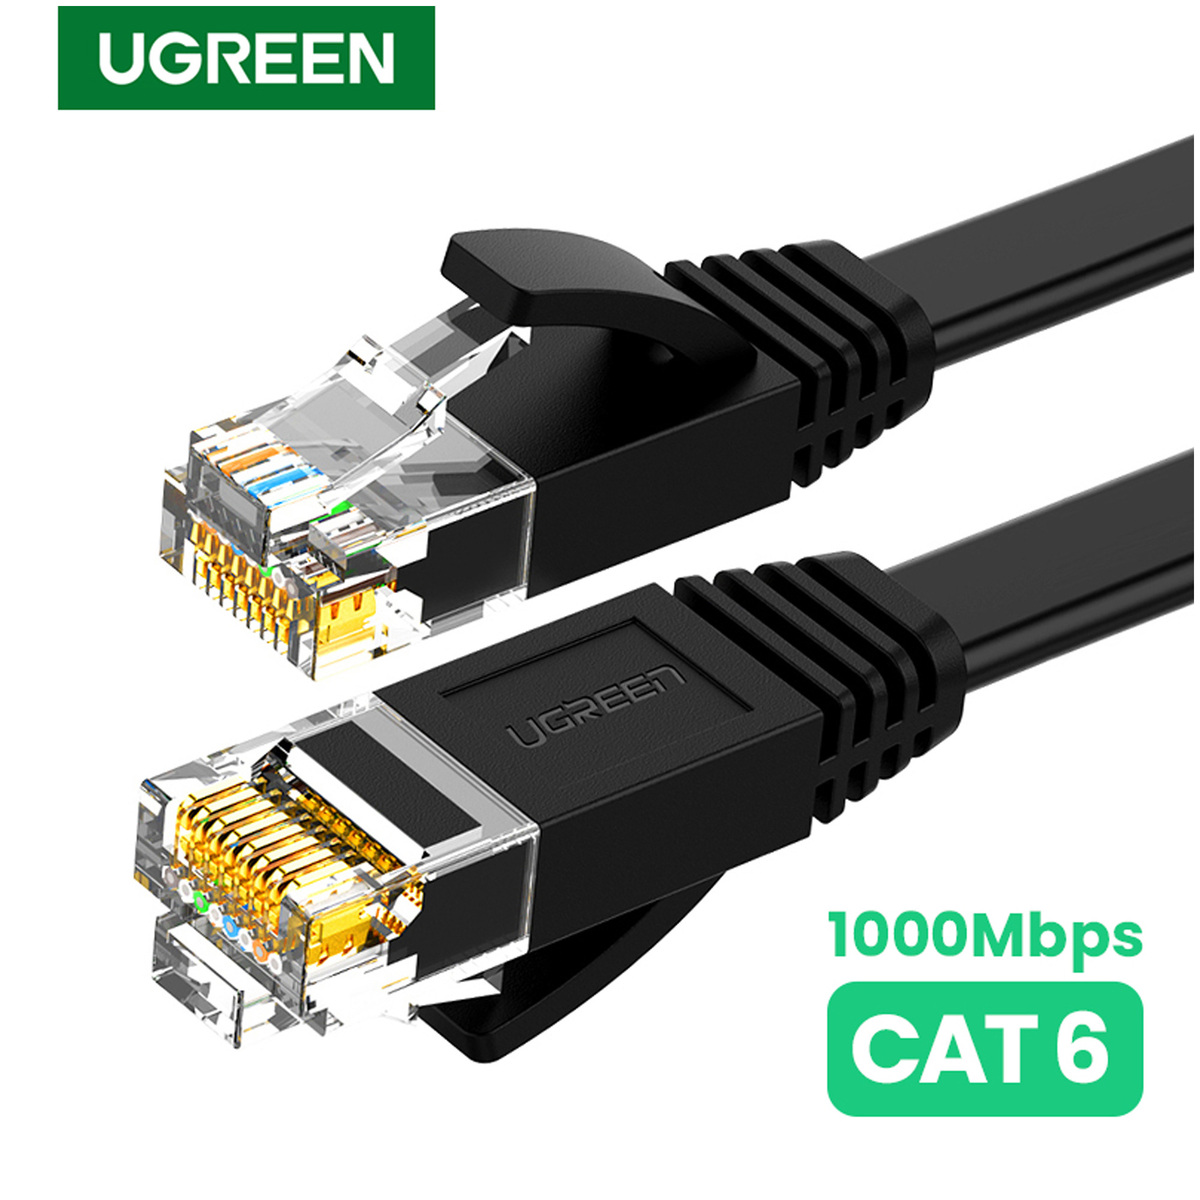 Ugreen Cat 6 Round UTP Gigabit Ethernet Network Cable, 5 m, Black, 20162